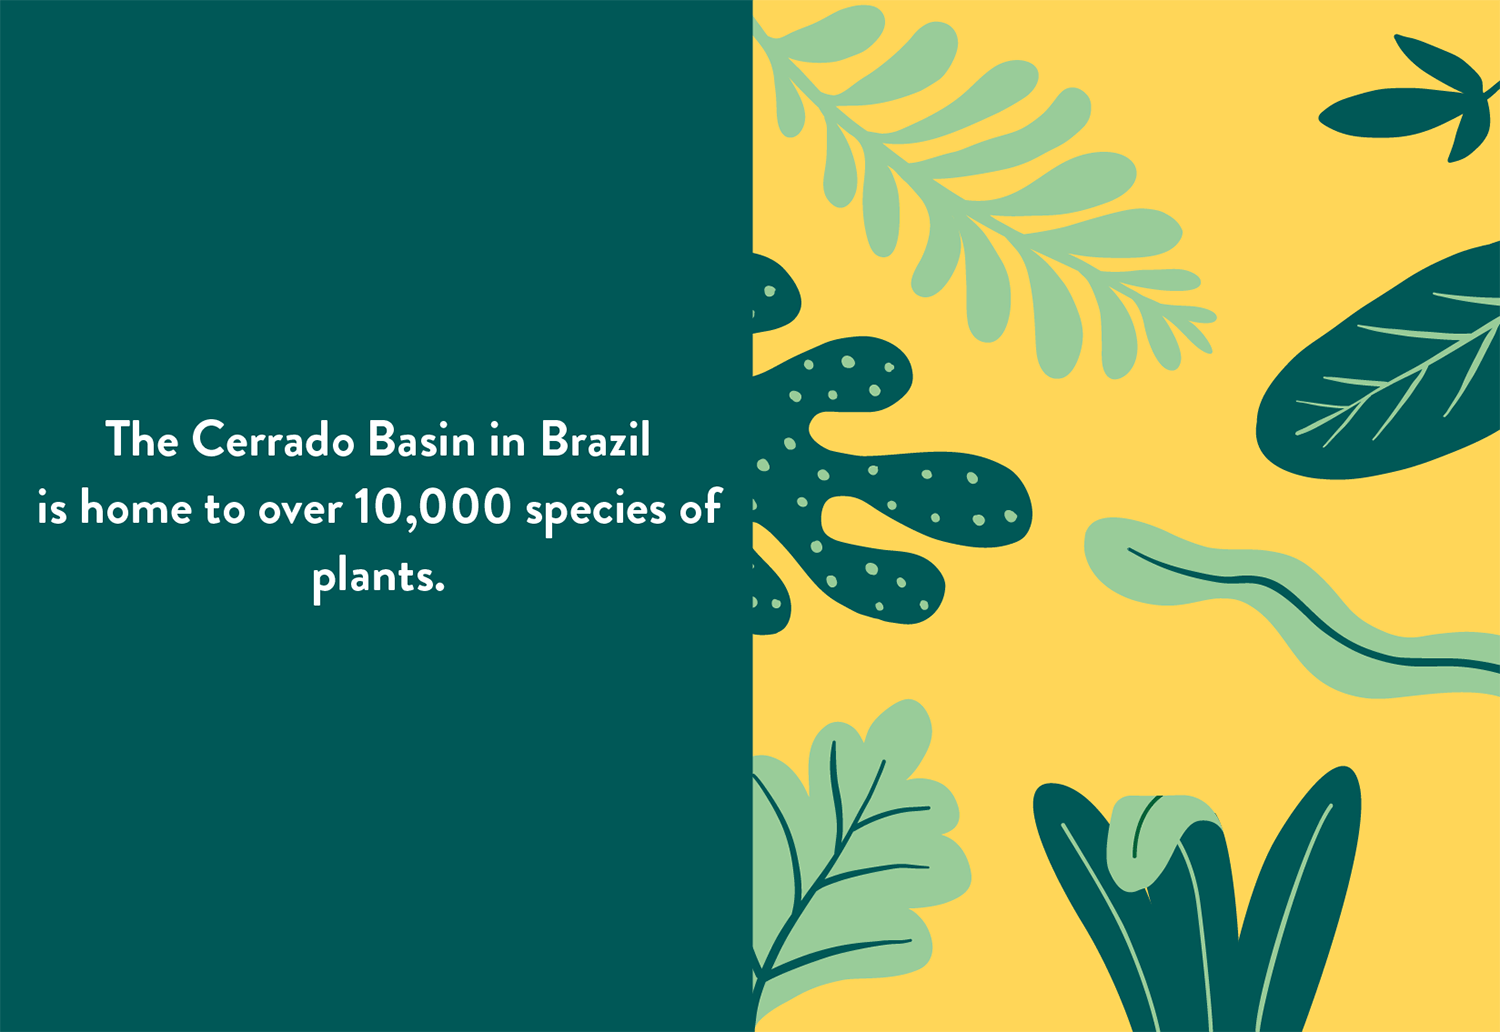 Infographic showing 10,000 species of plants in Cerrado Basin